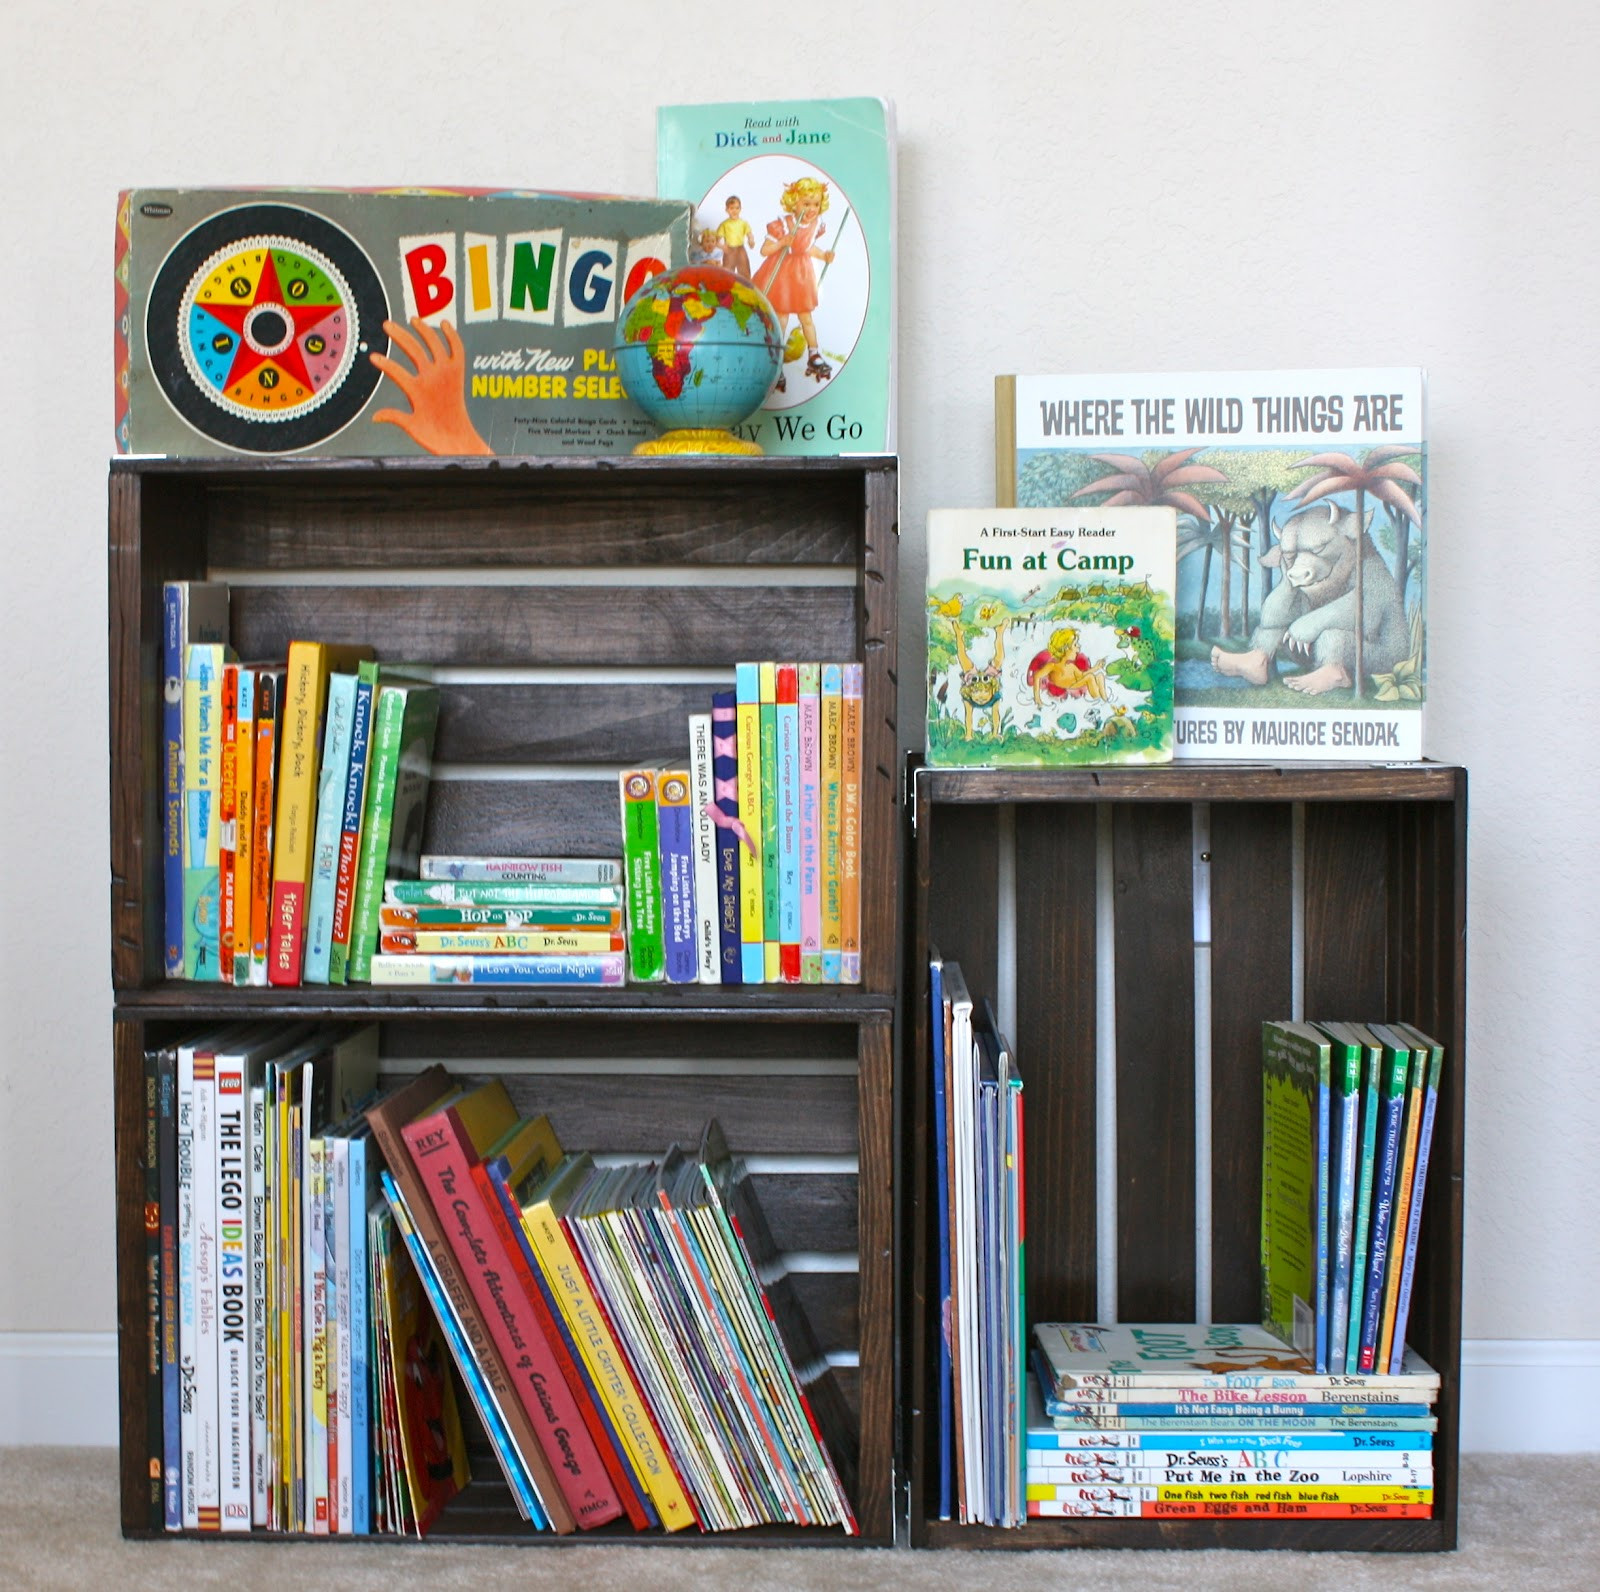 Best ideas about DIY Wooden Crate Bookshelf
. Save or Pin christina williams DIY Crate Bookshelf Now.